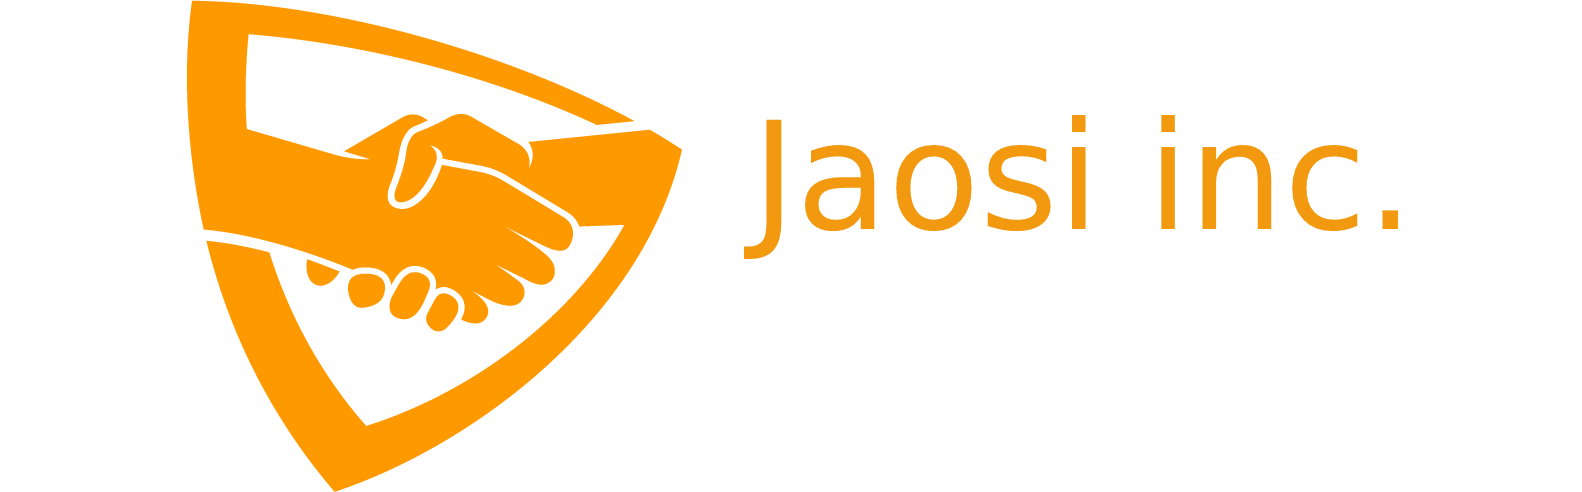 Jasosi